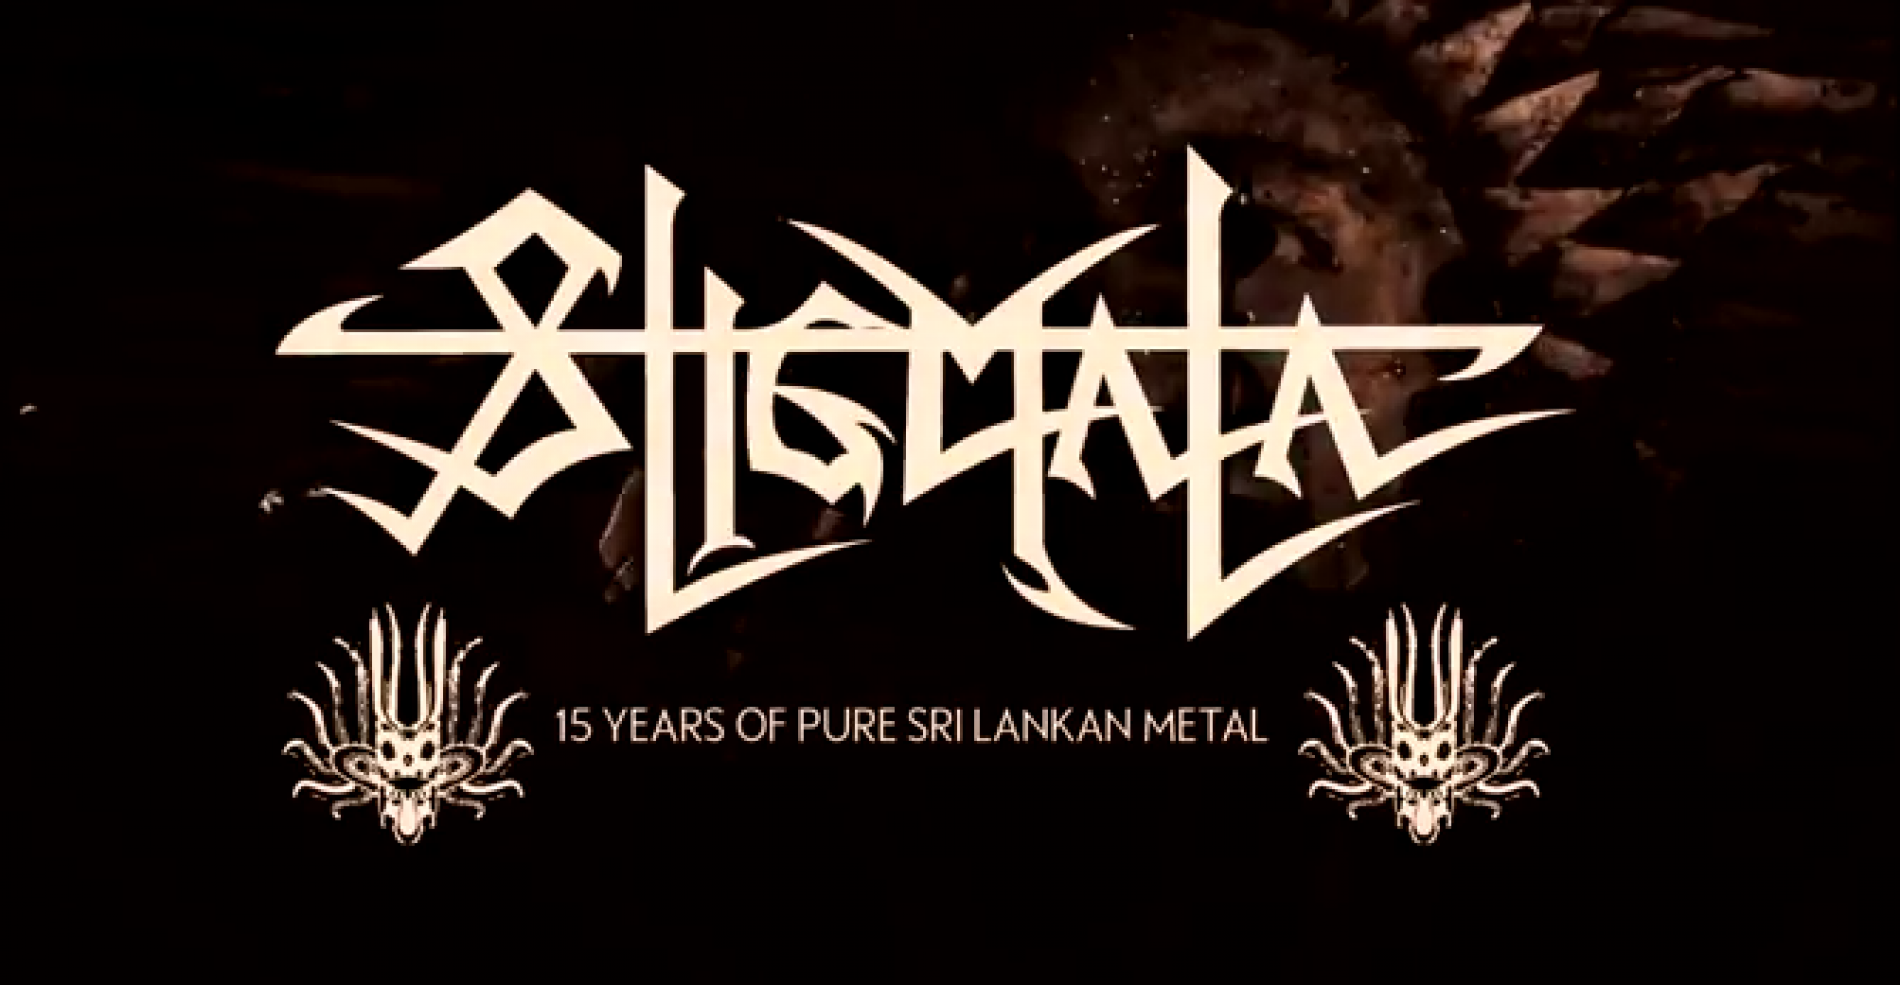 Stigmata Launches New Website & Lyrics Video